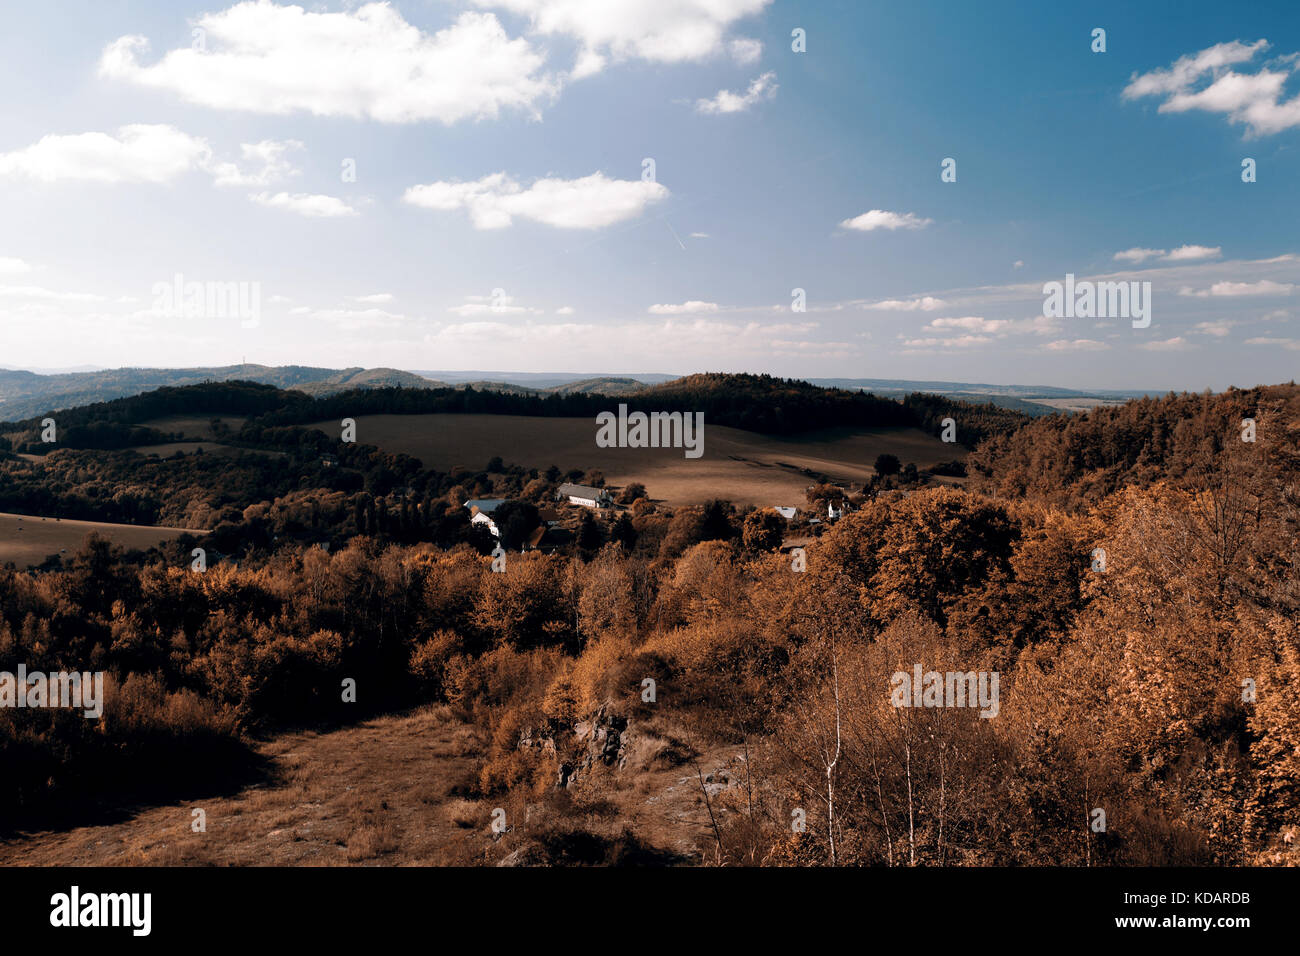 small beautiful village in the Czech Republic Stock Photo